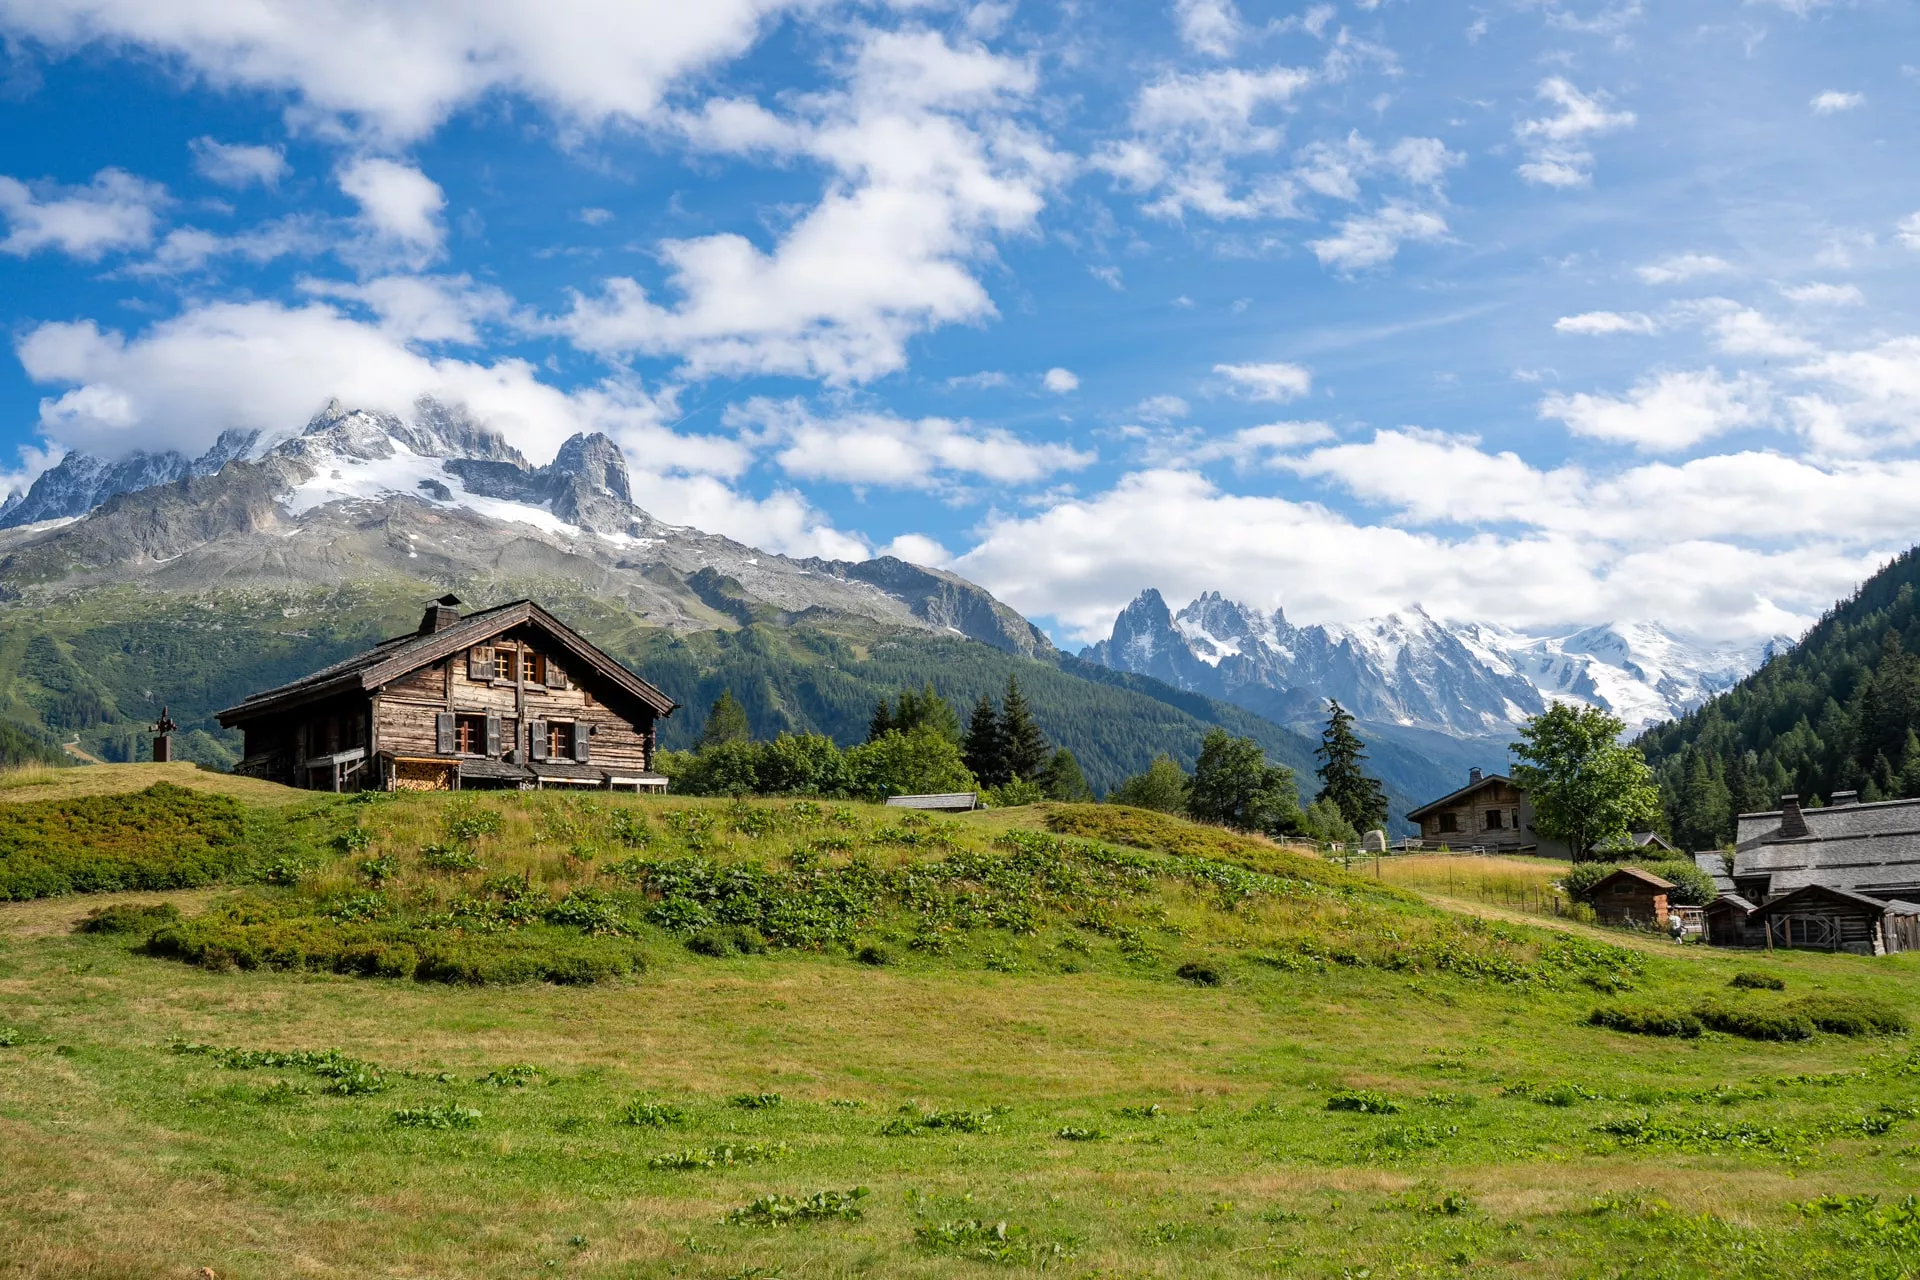 Hiking through idyllic alpine villages